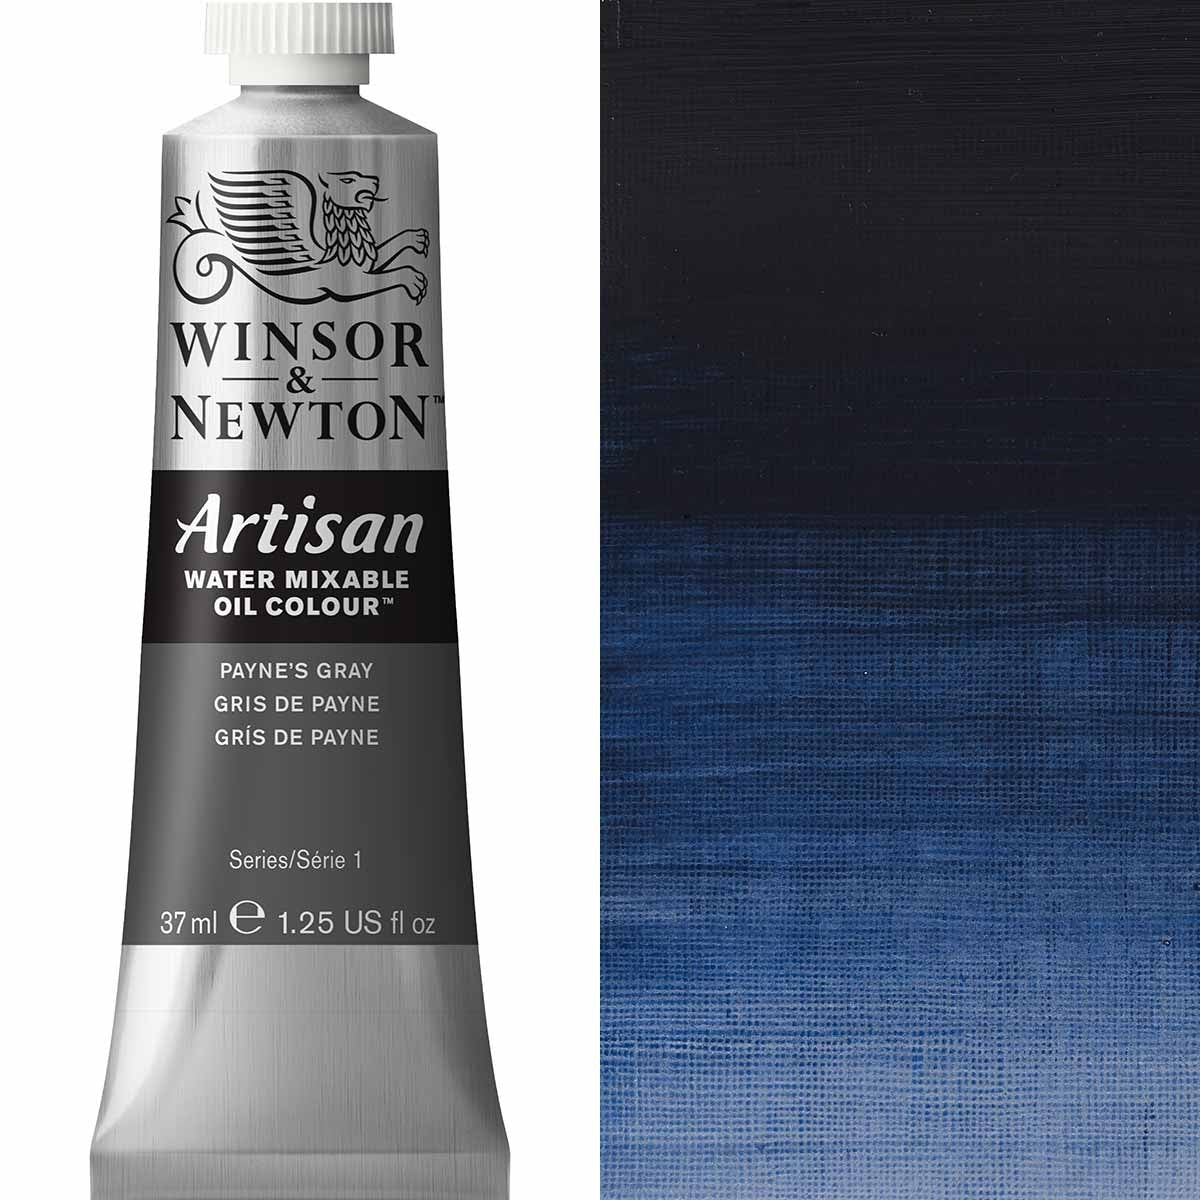 Winsor and Newton - Artisan Oil Colour Watermixable - 37ml - Paynes Grey